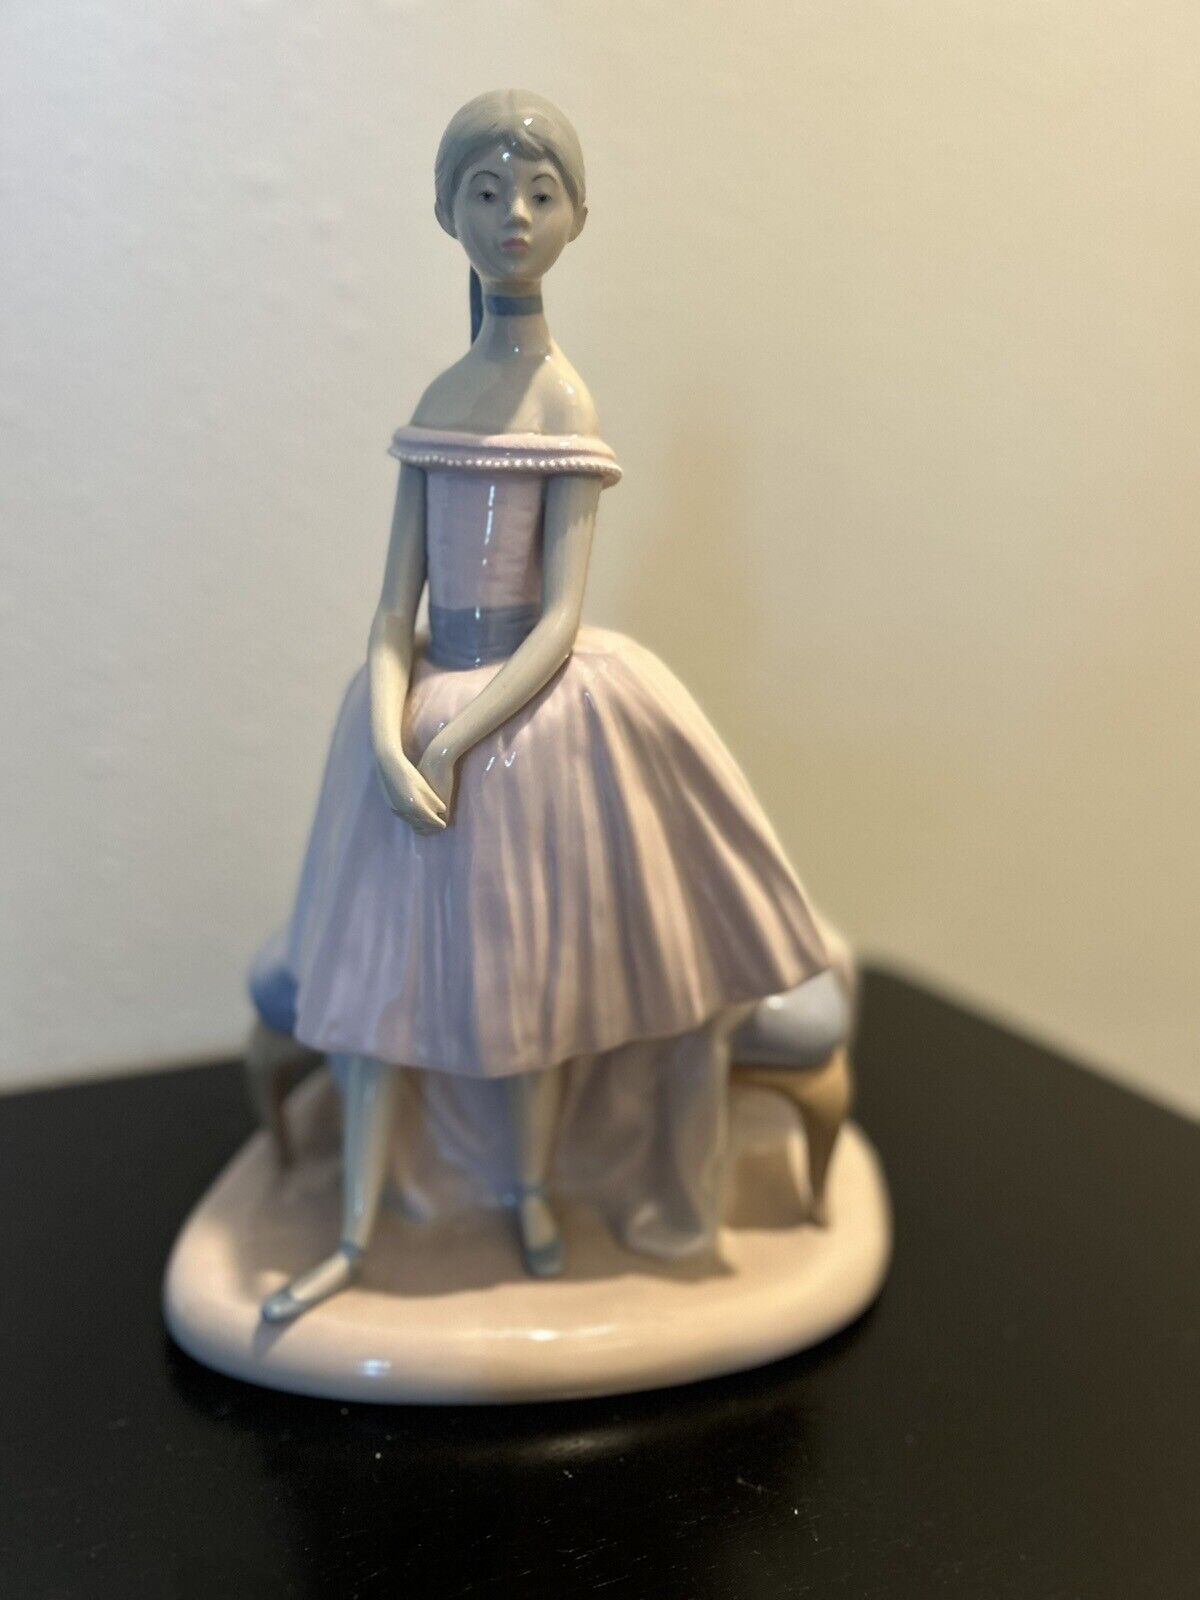 Miquel Requena Valencia Spain Porcelain Lady in Beautiful Dress Figurine